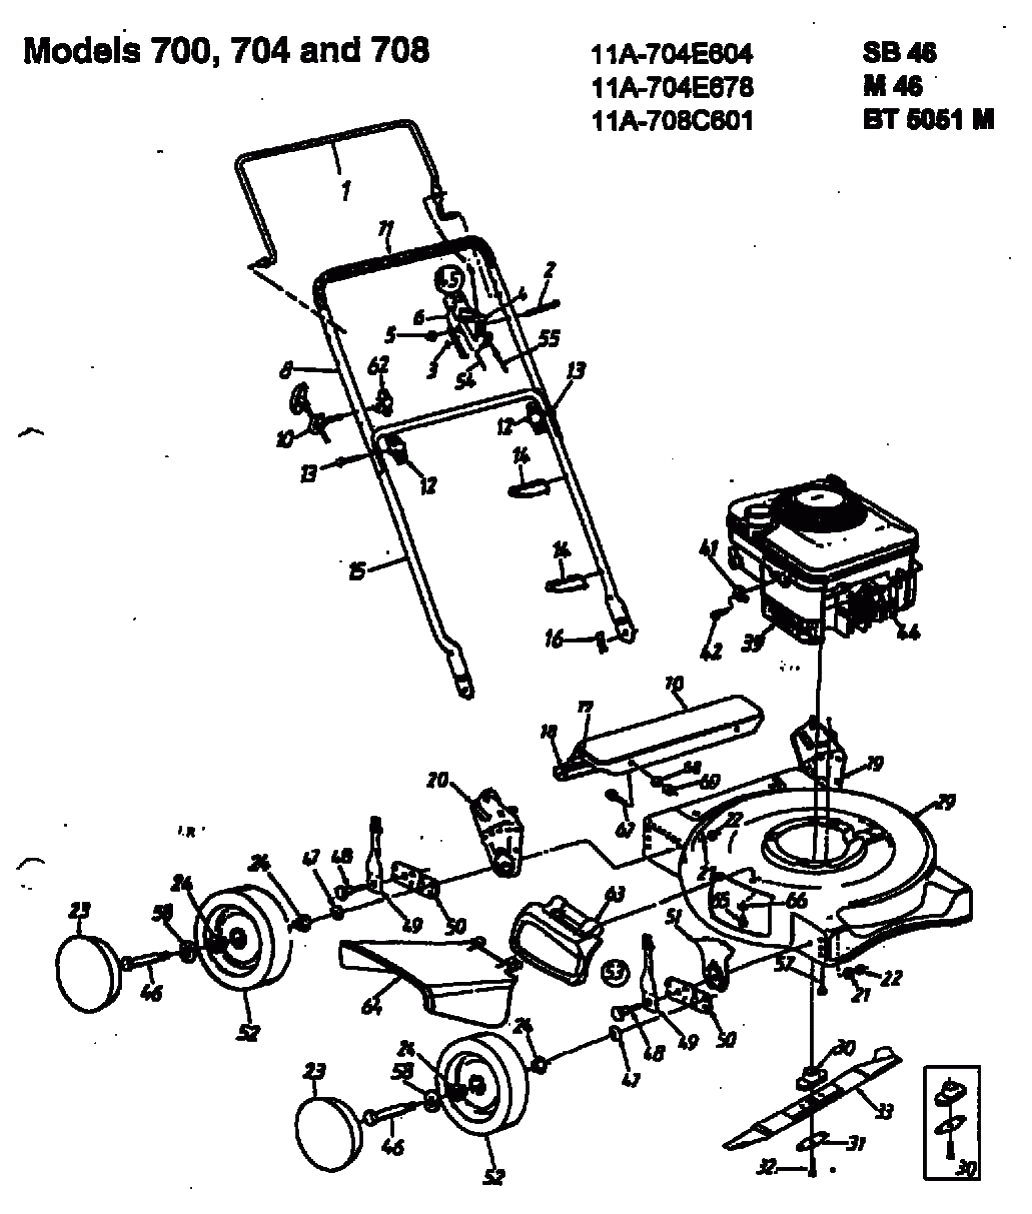 MTD Артикул 11A-704E678 (год выпуска 1998)